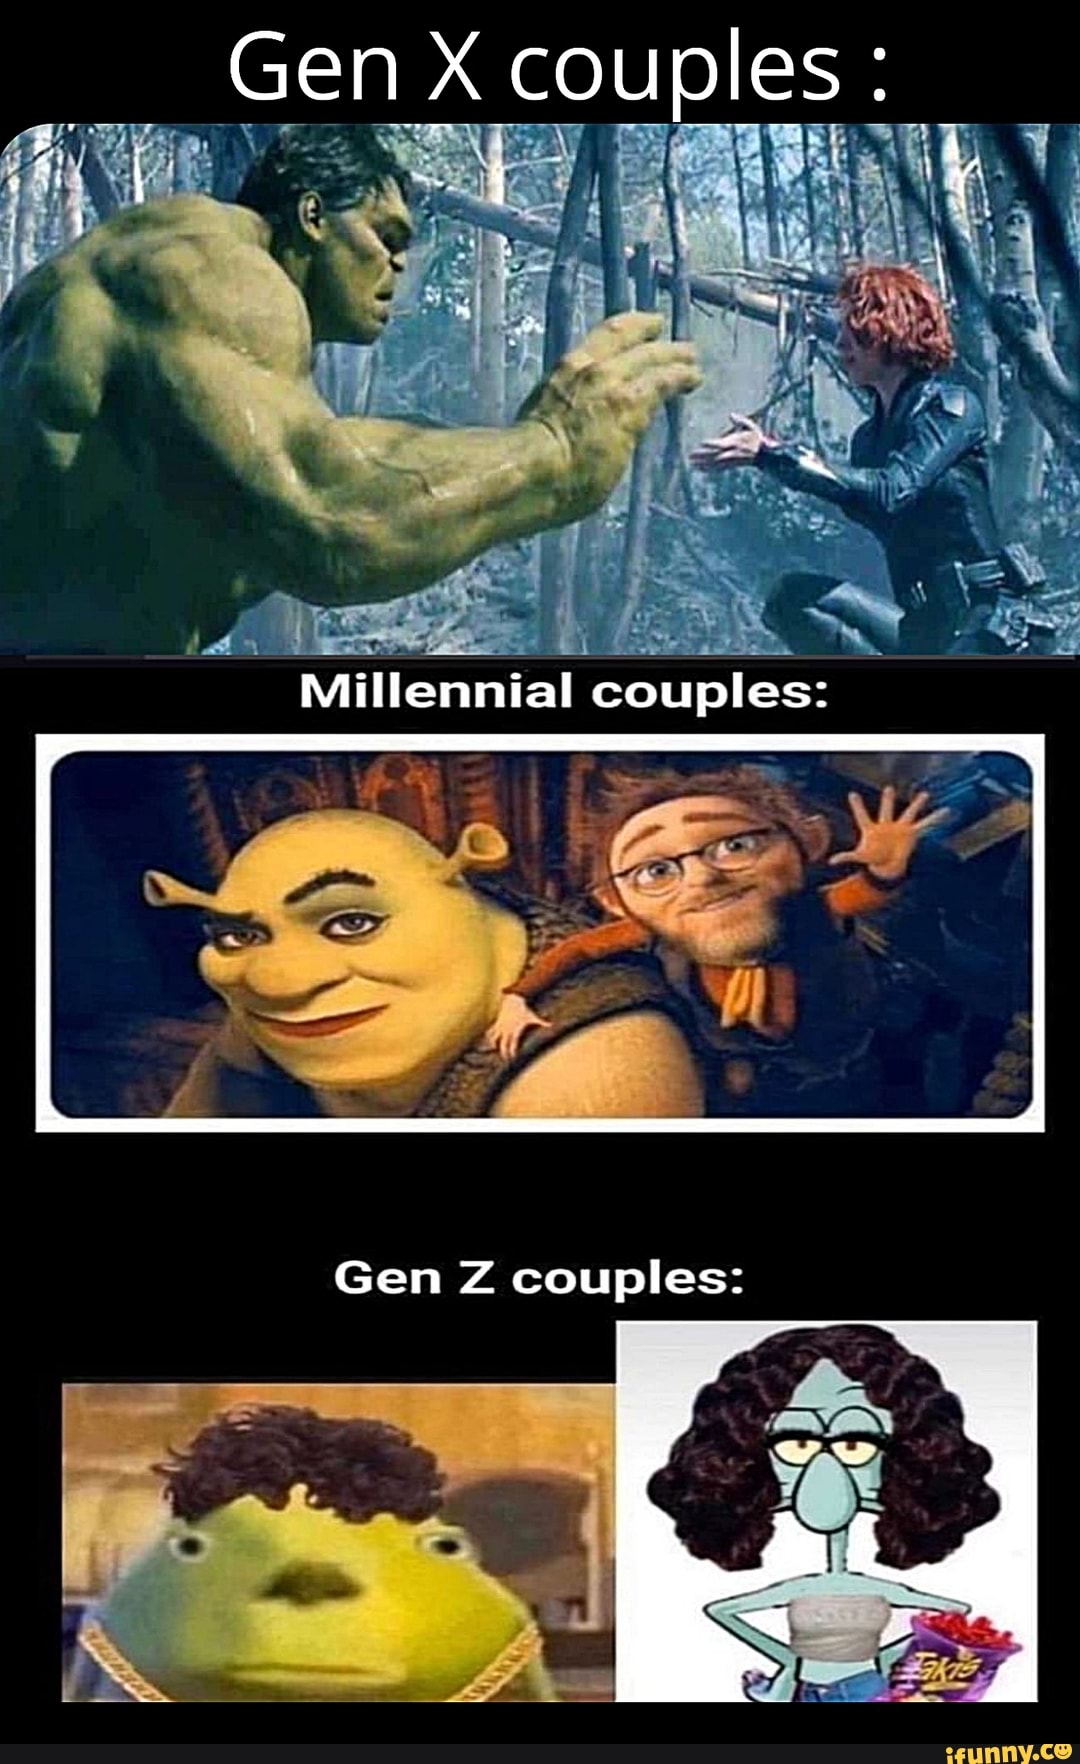 Gen Xx couples : Millennial couples: Gen Z couples: - iFunny